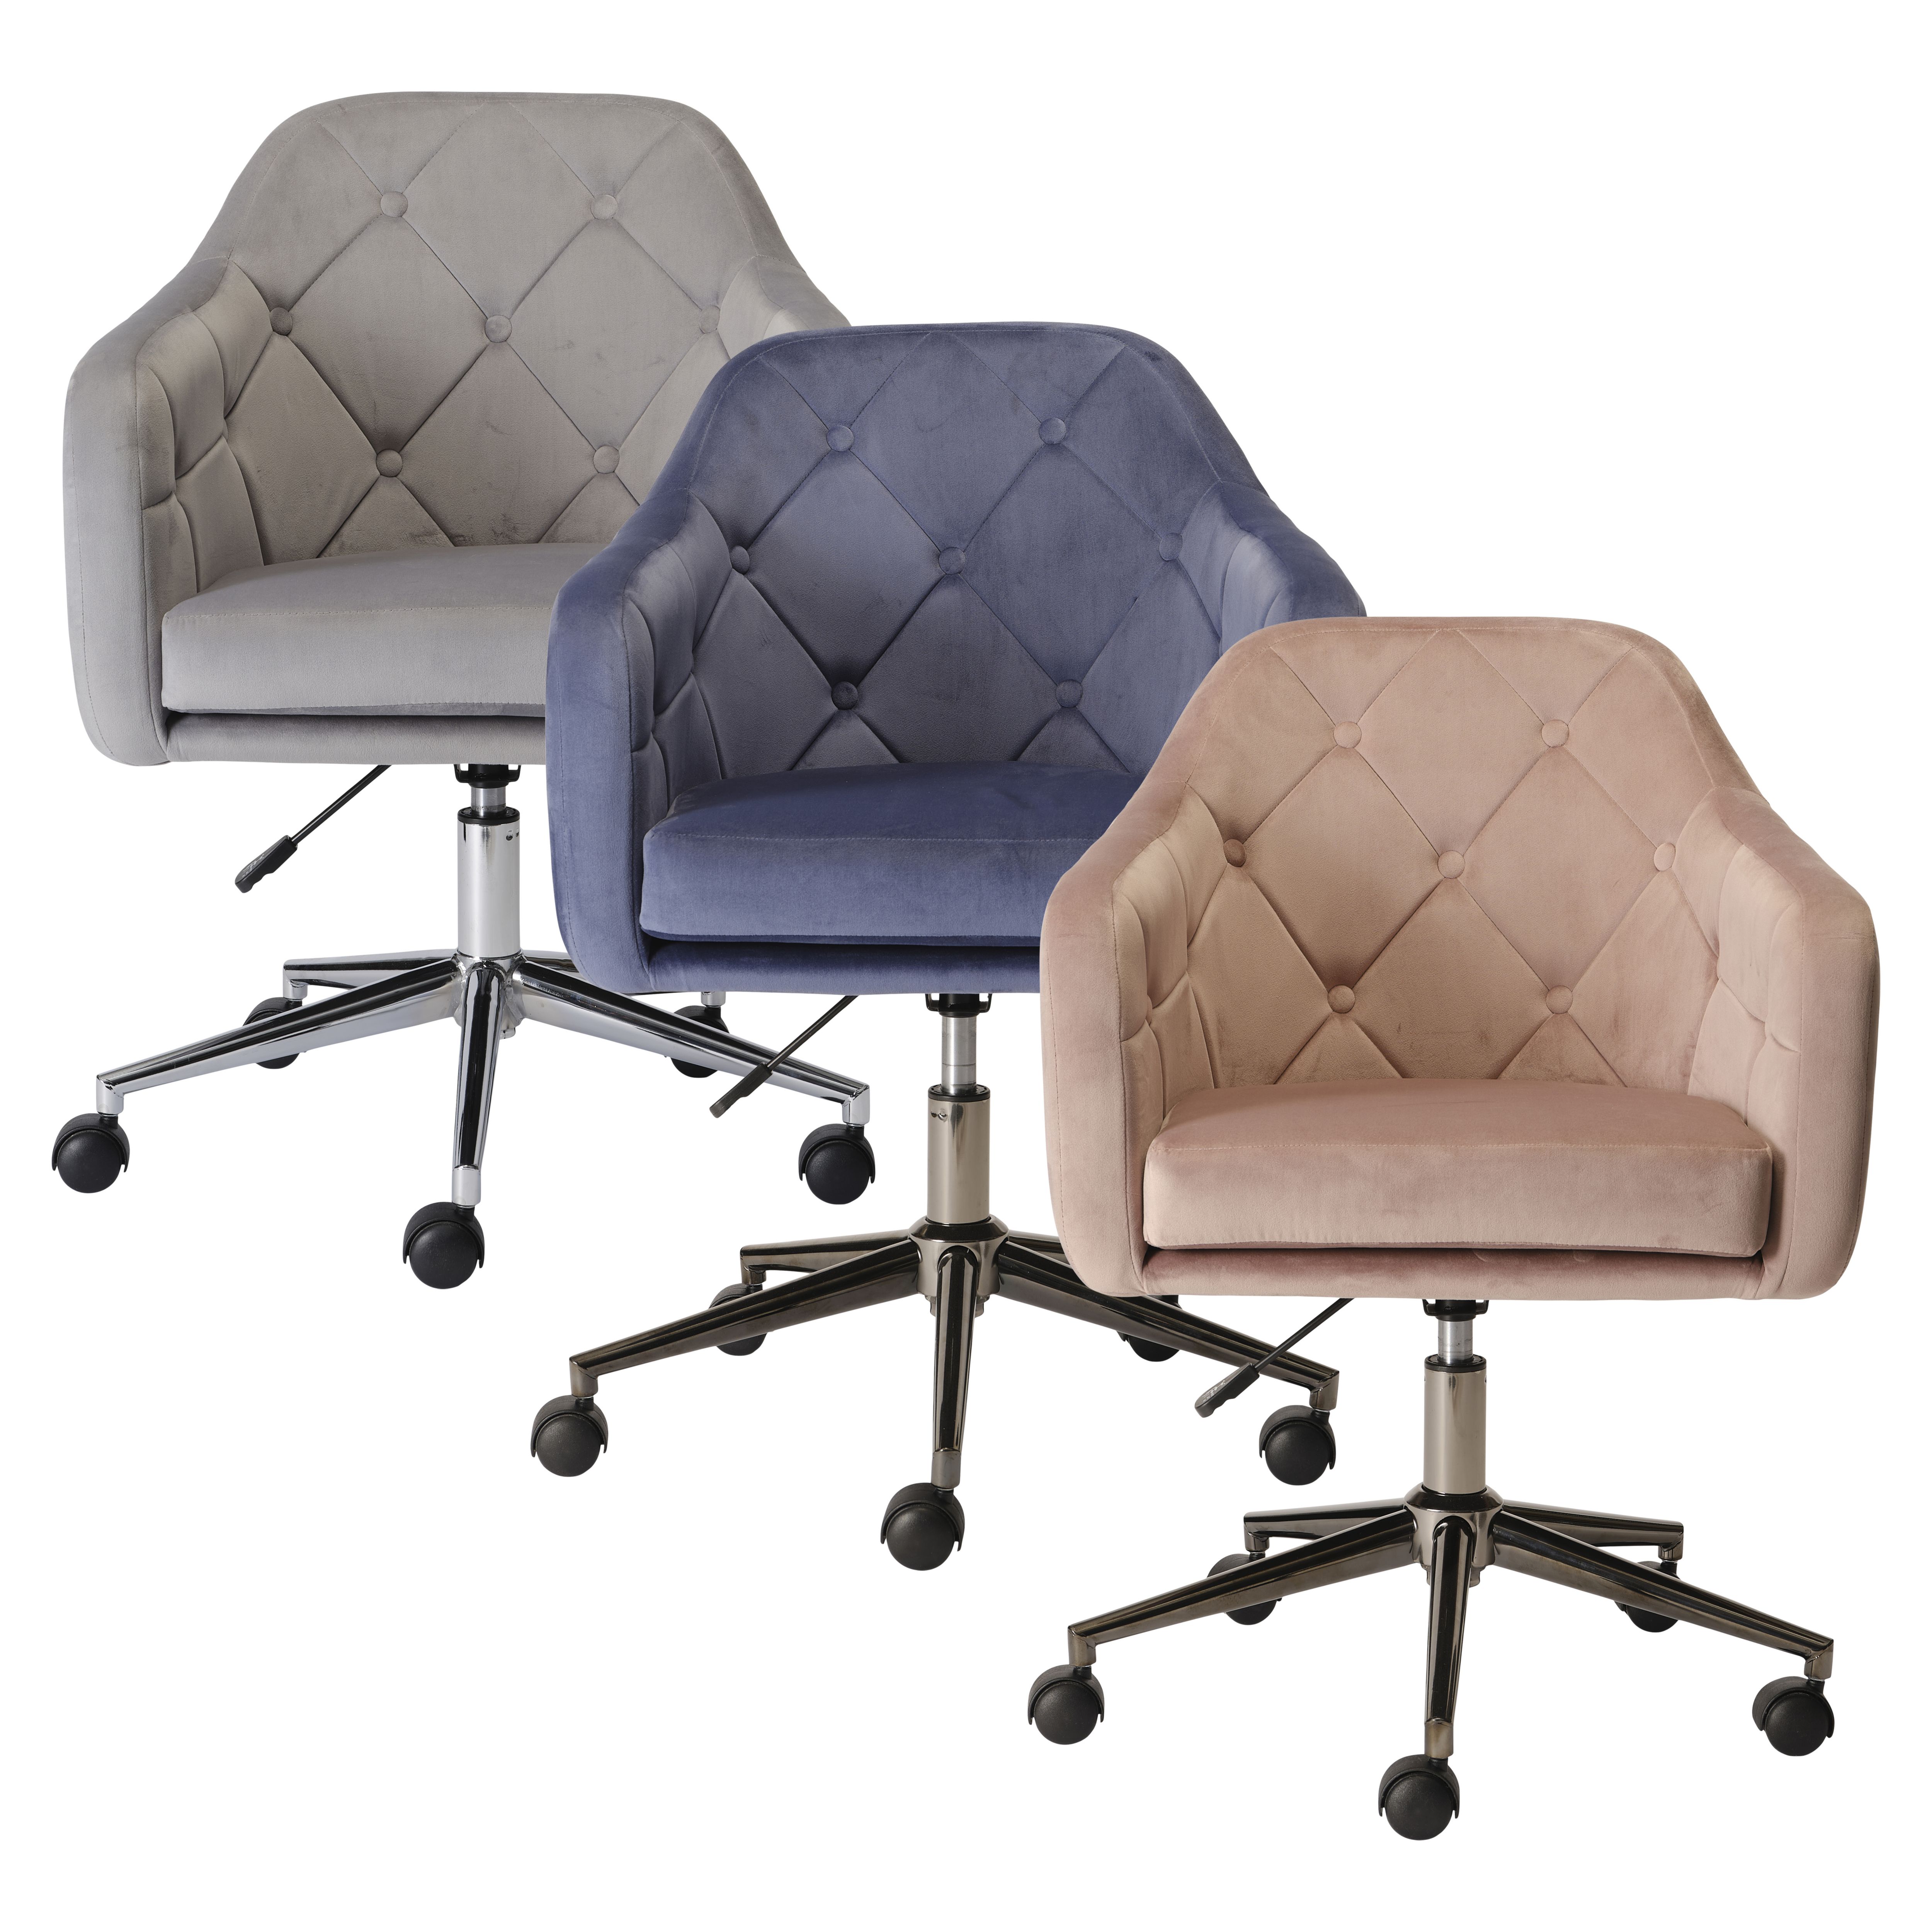 Trevillet Mink Velvet effect Office chair (H)915mm (W)620mm (D)660mm